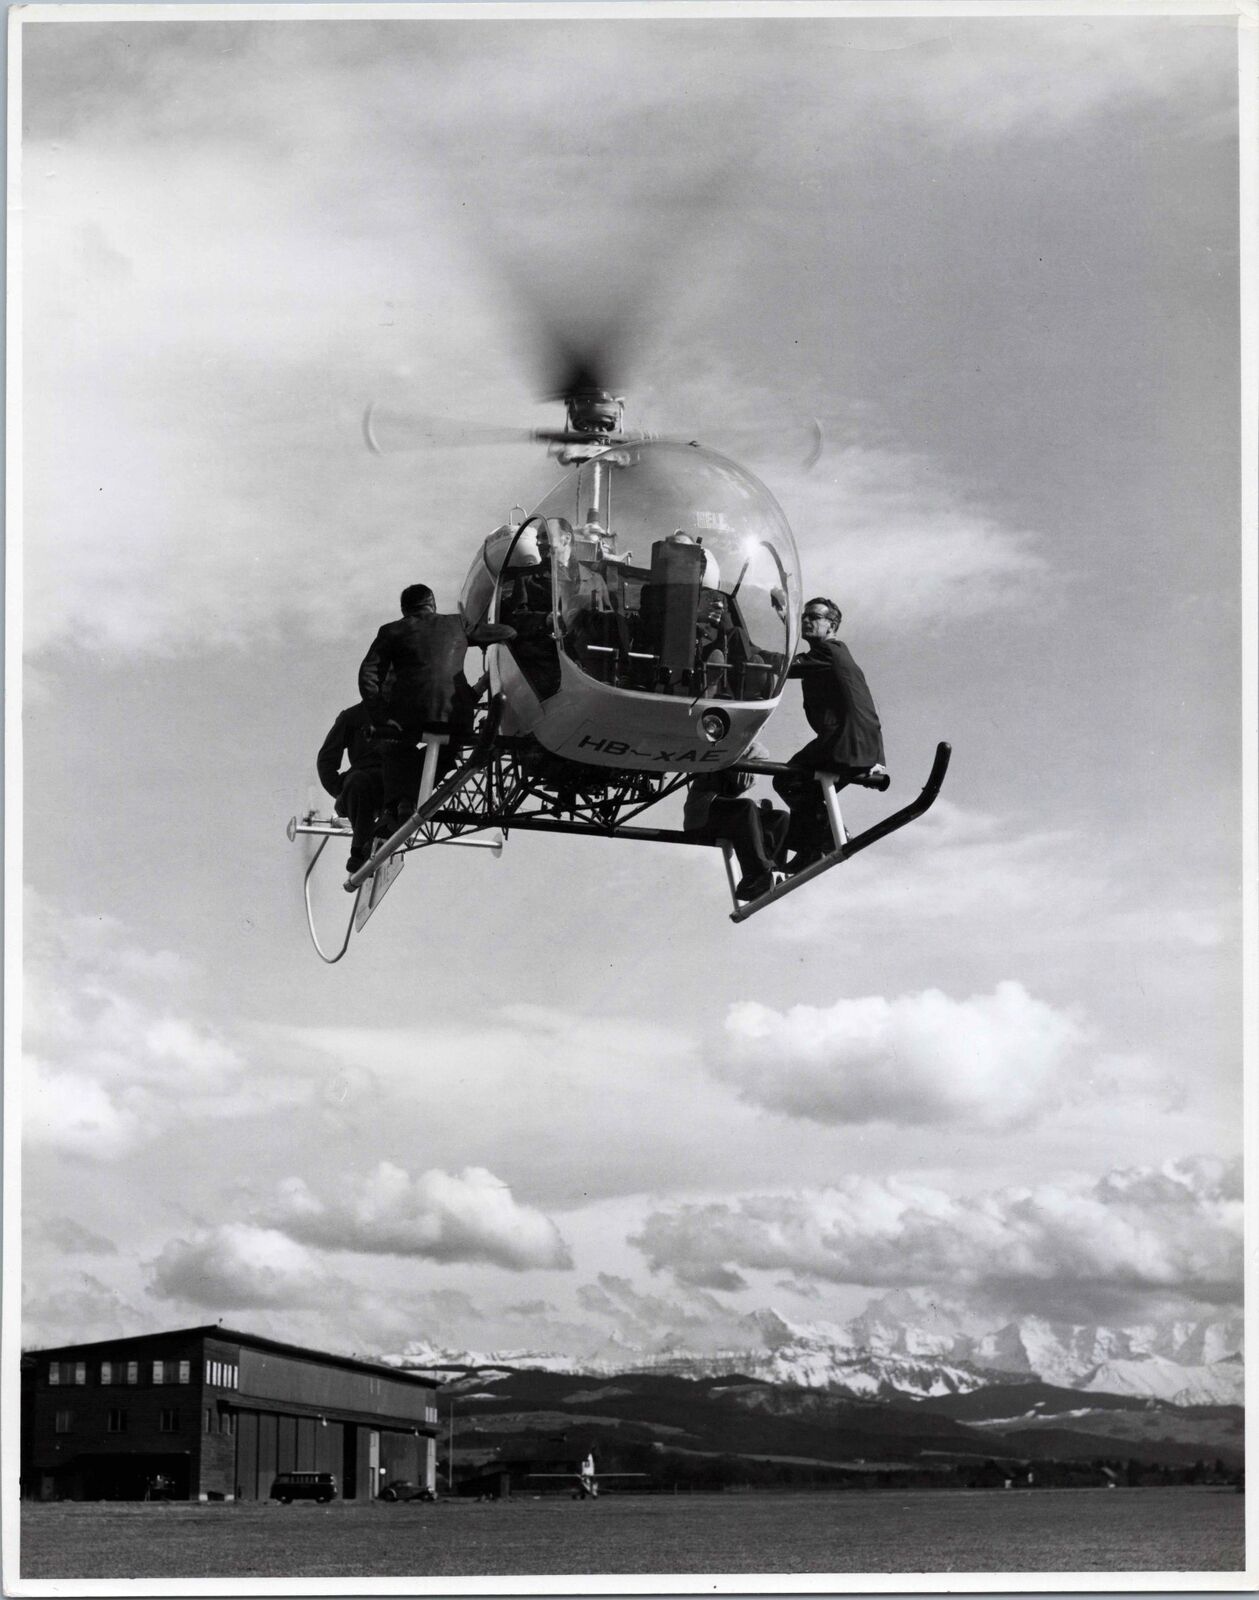 BELL 47G HB-XAE HELICOPTER HELISWISS ORIGINAL PRESS PHOTO SWITZERLAND 3